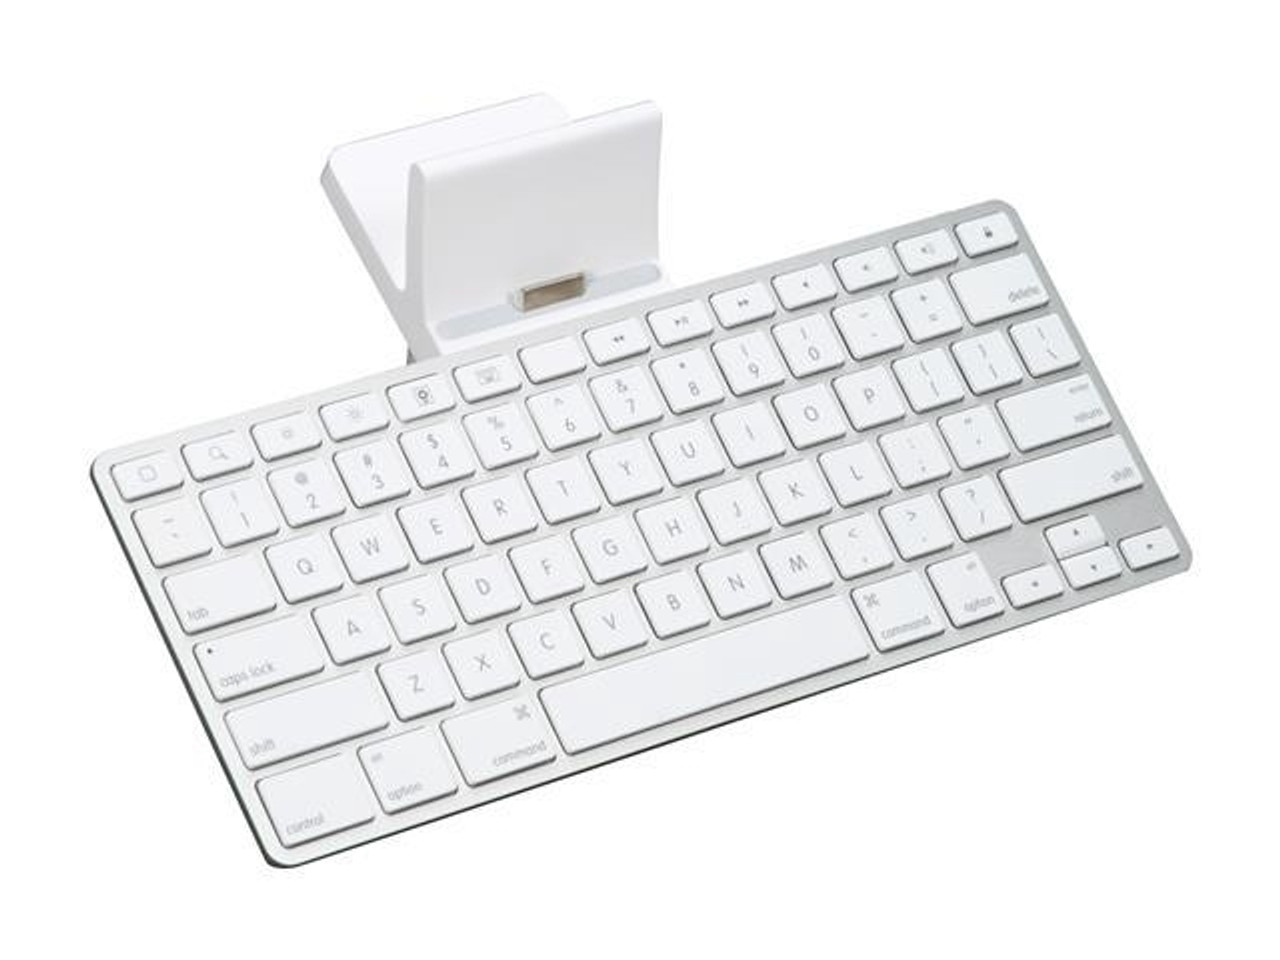 ipad 2 keyboard best one